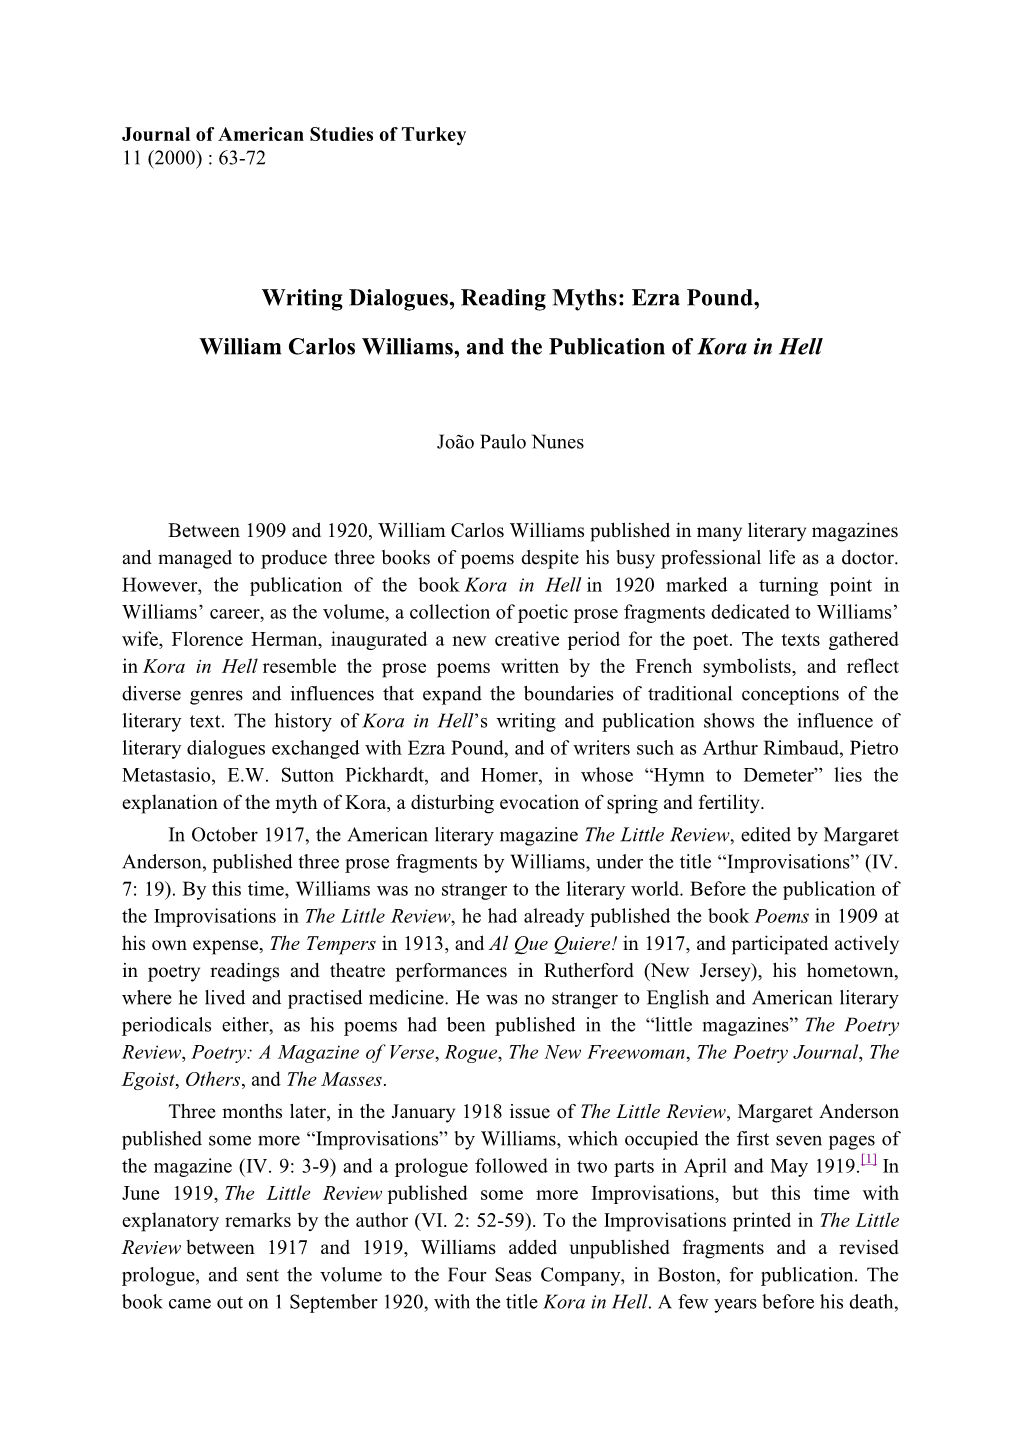 Ezra Pound, William Carlos Williams, and the Publication Of